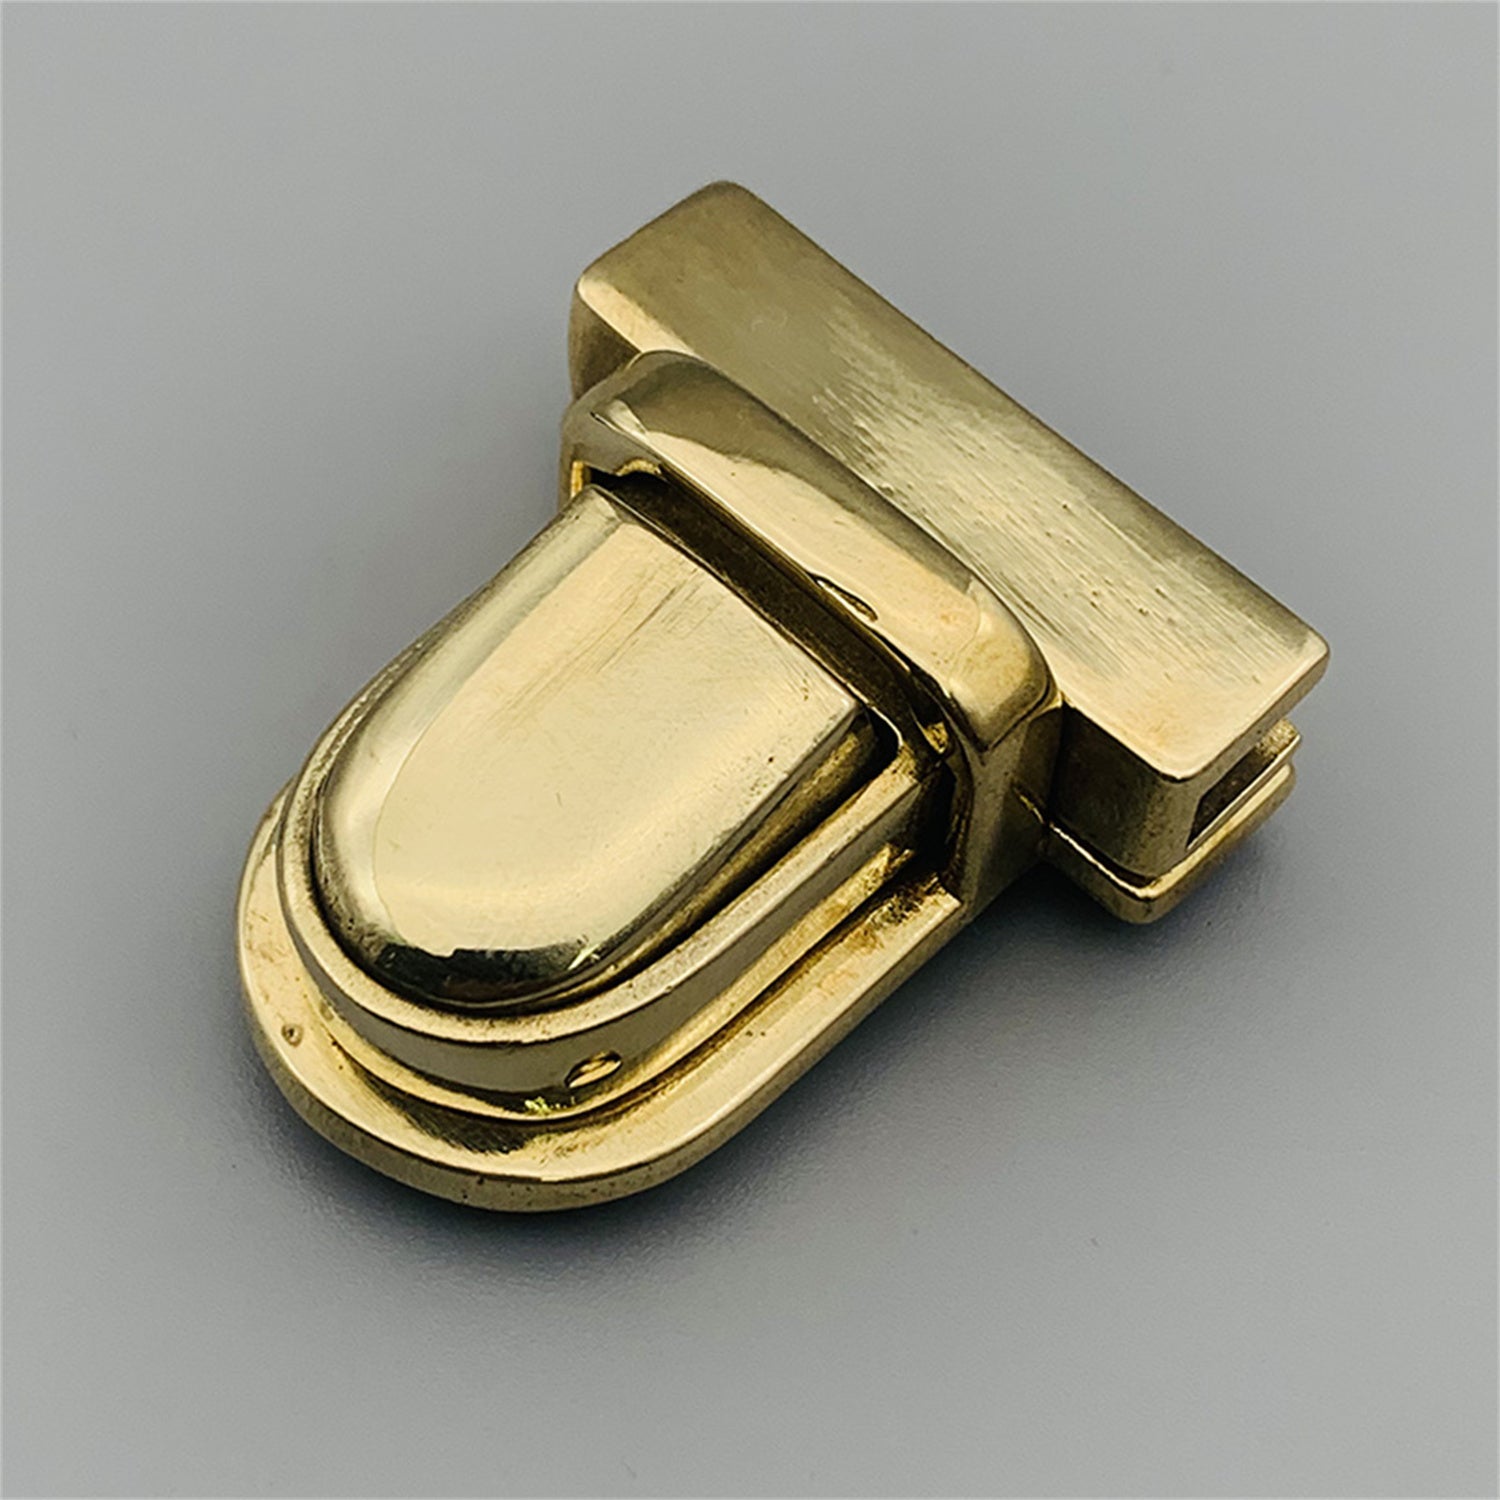 Brass thumb lock, leather bag snap lock, brass catch lock, flat